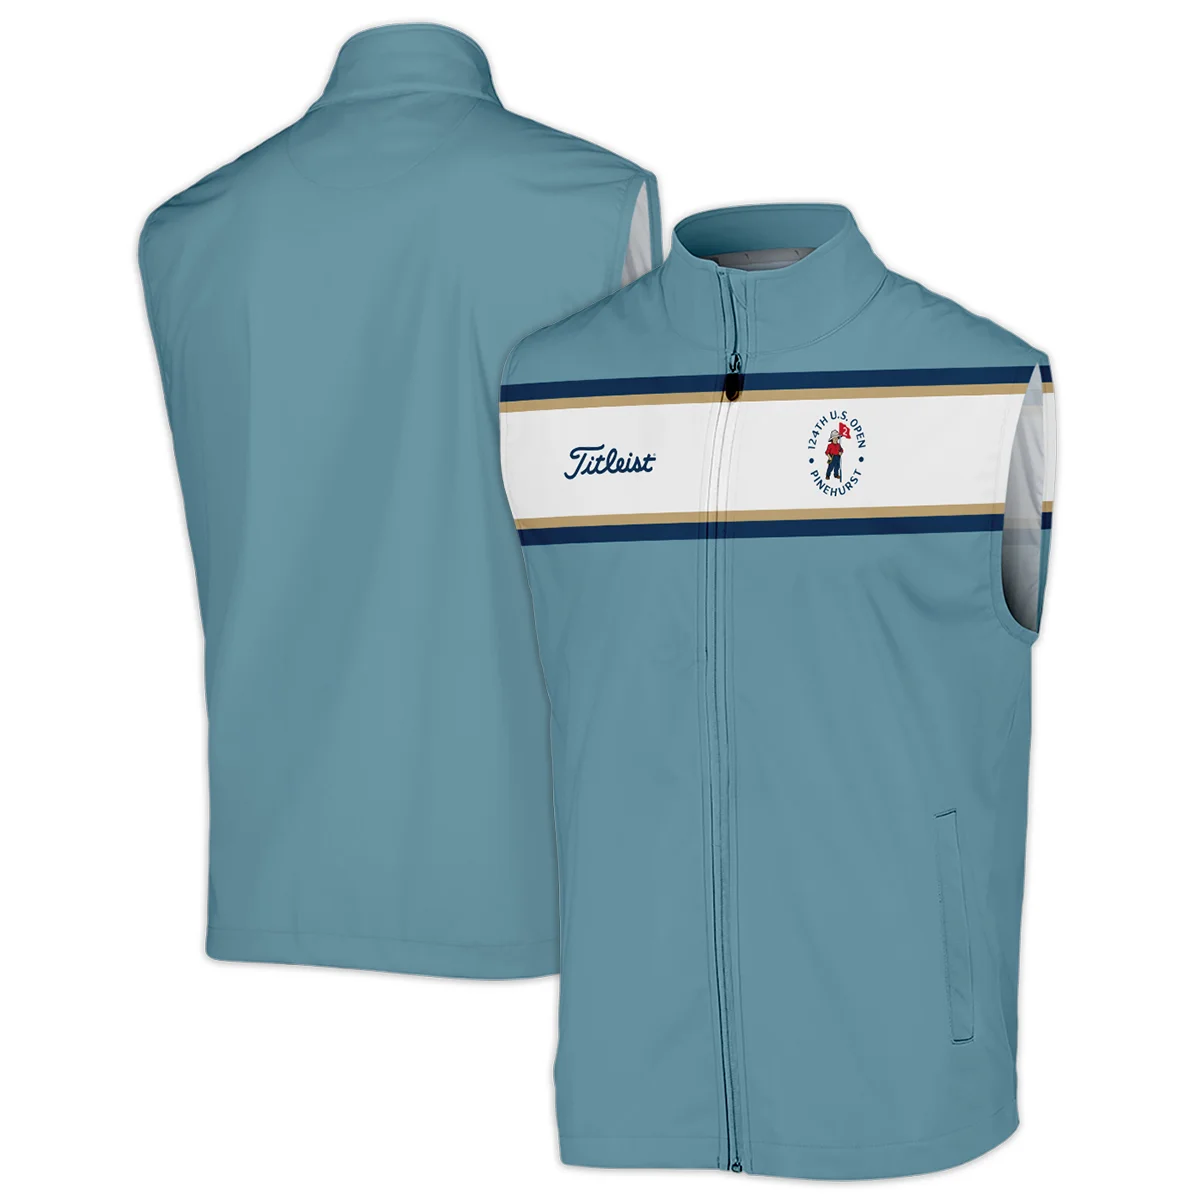 124th U.S. Open Pinehurst Golf Sport Mostly Desaturated Dark Blue Yellow Titleist Sleeveless Jacket Style Classic